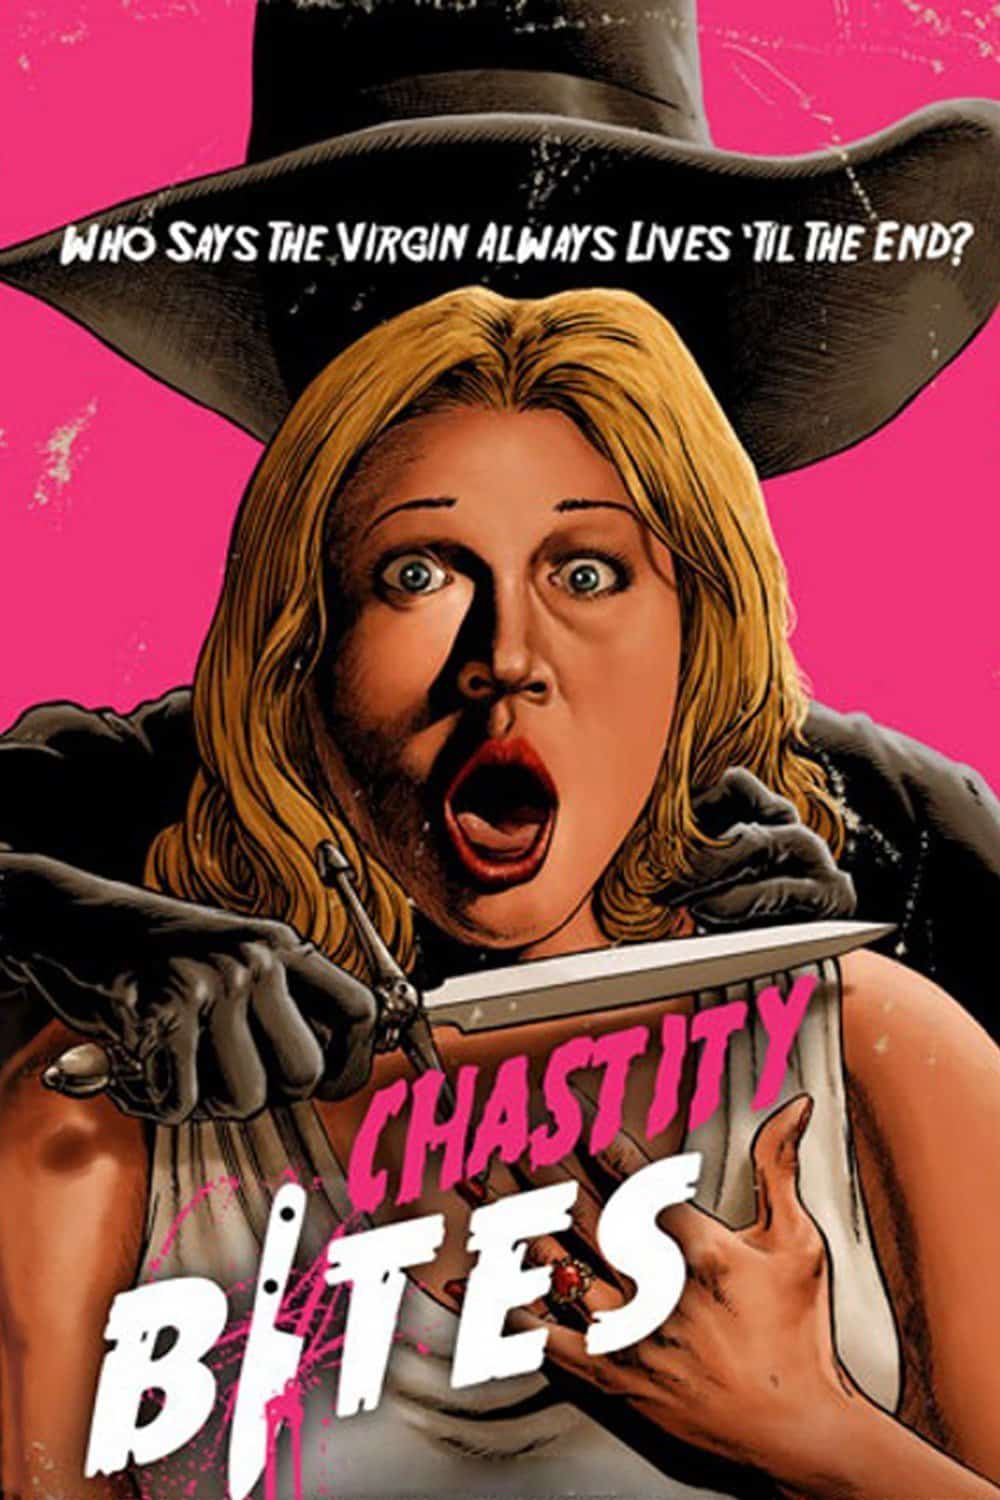 Chastity Bites, 2013 